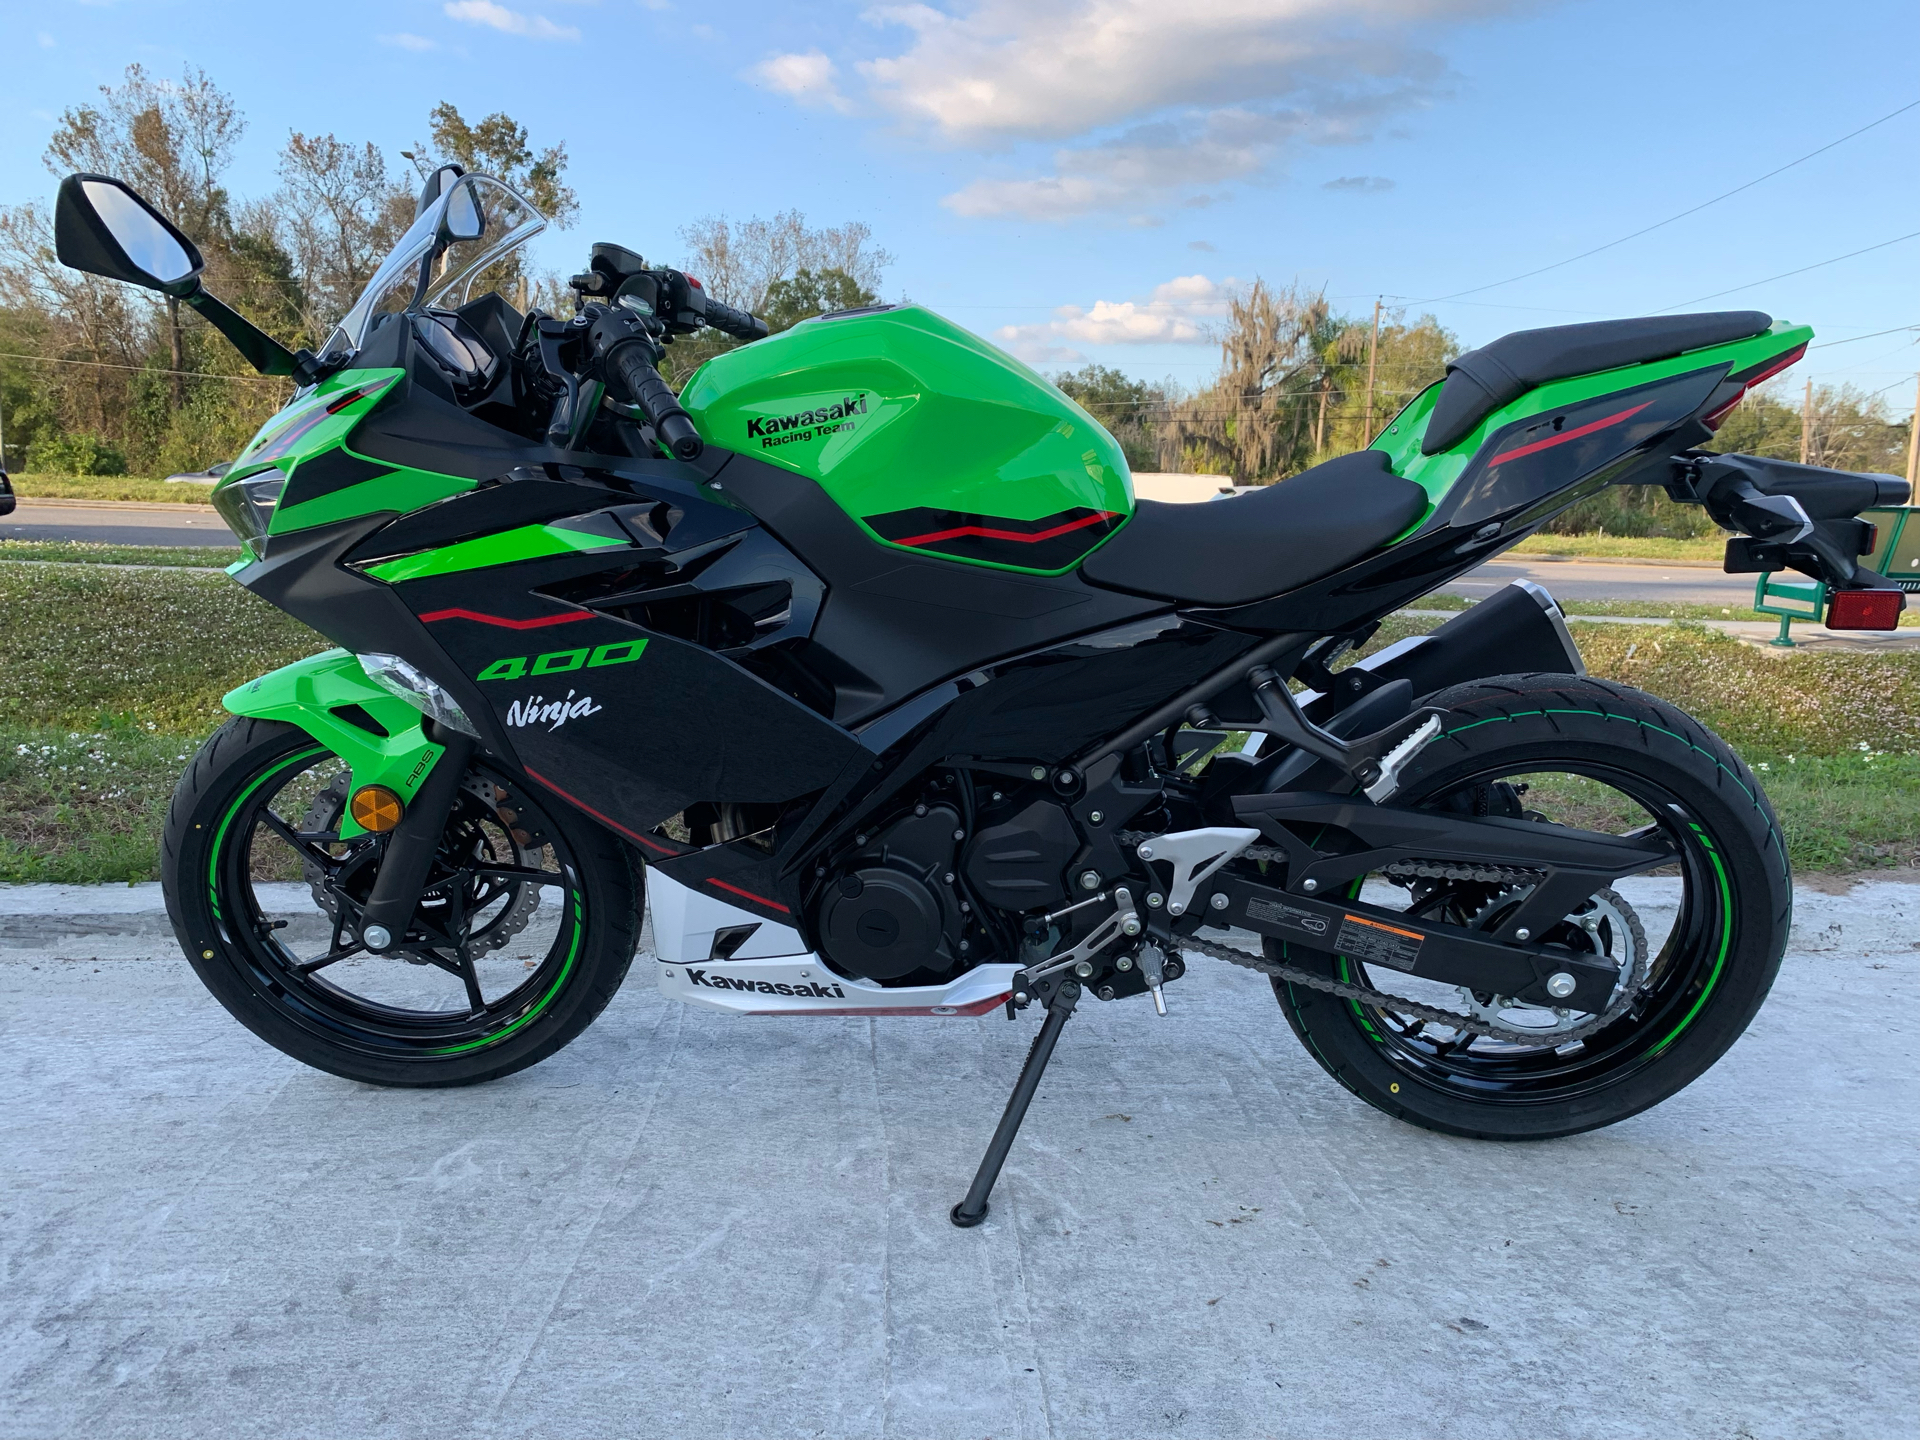 2022 Kawasaki Ninja 400 ABS KRT Edition in Orlando, Florida - Photo 5